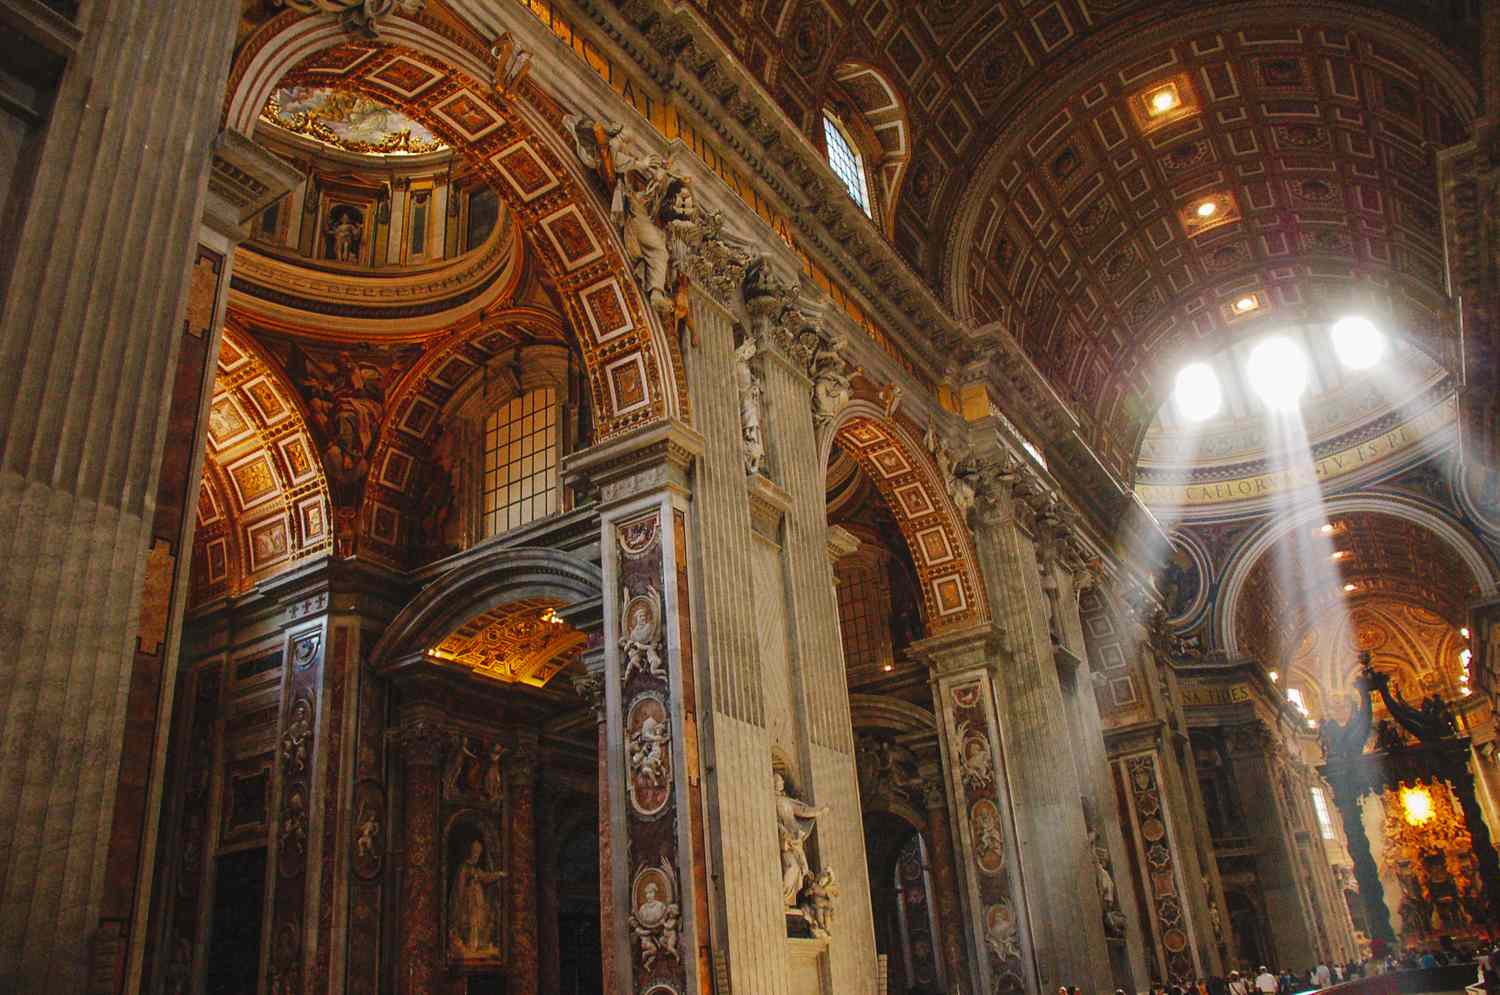 10 Surprising Facts About Saint Peter's Basilica - Facts.net